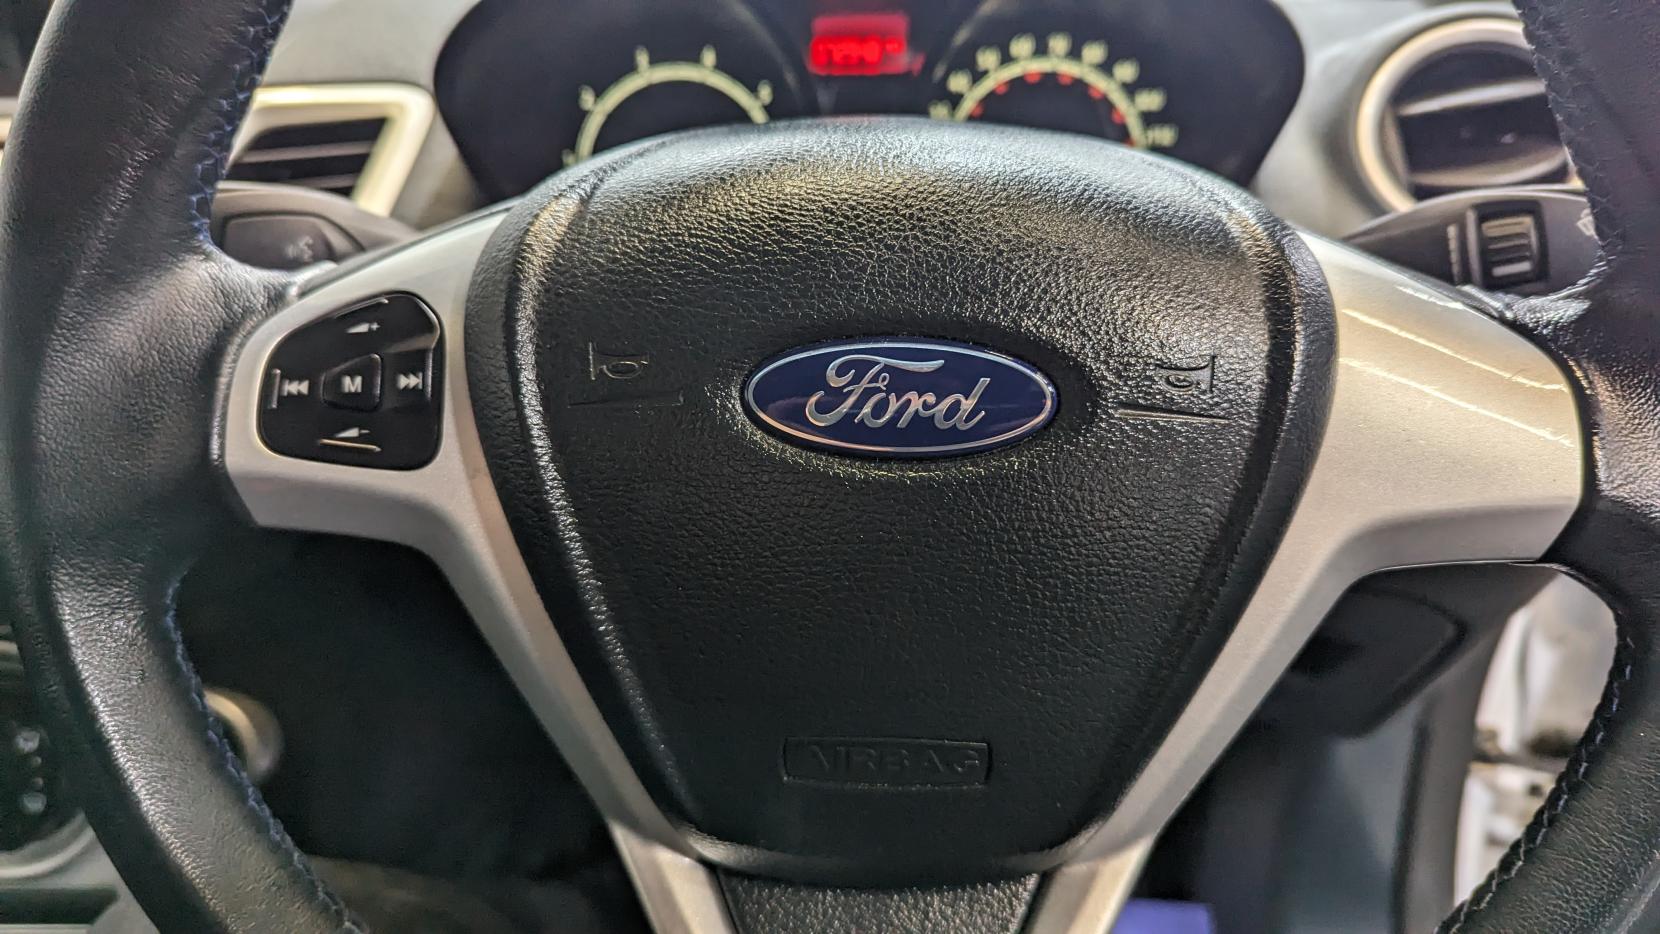 Ford Fiesta 1.6 S1600 Hatchback 3dr Petrol Manual (134 g/km, 118 bhp)